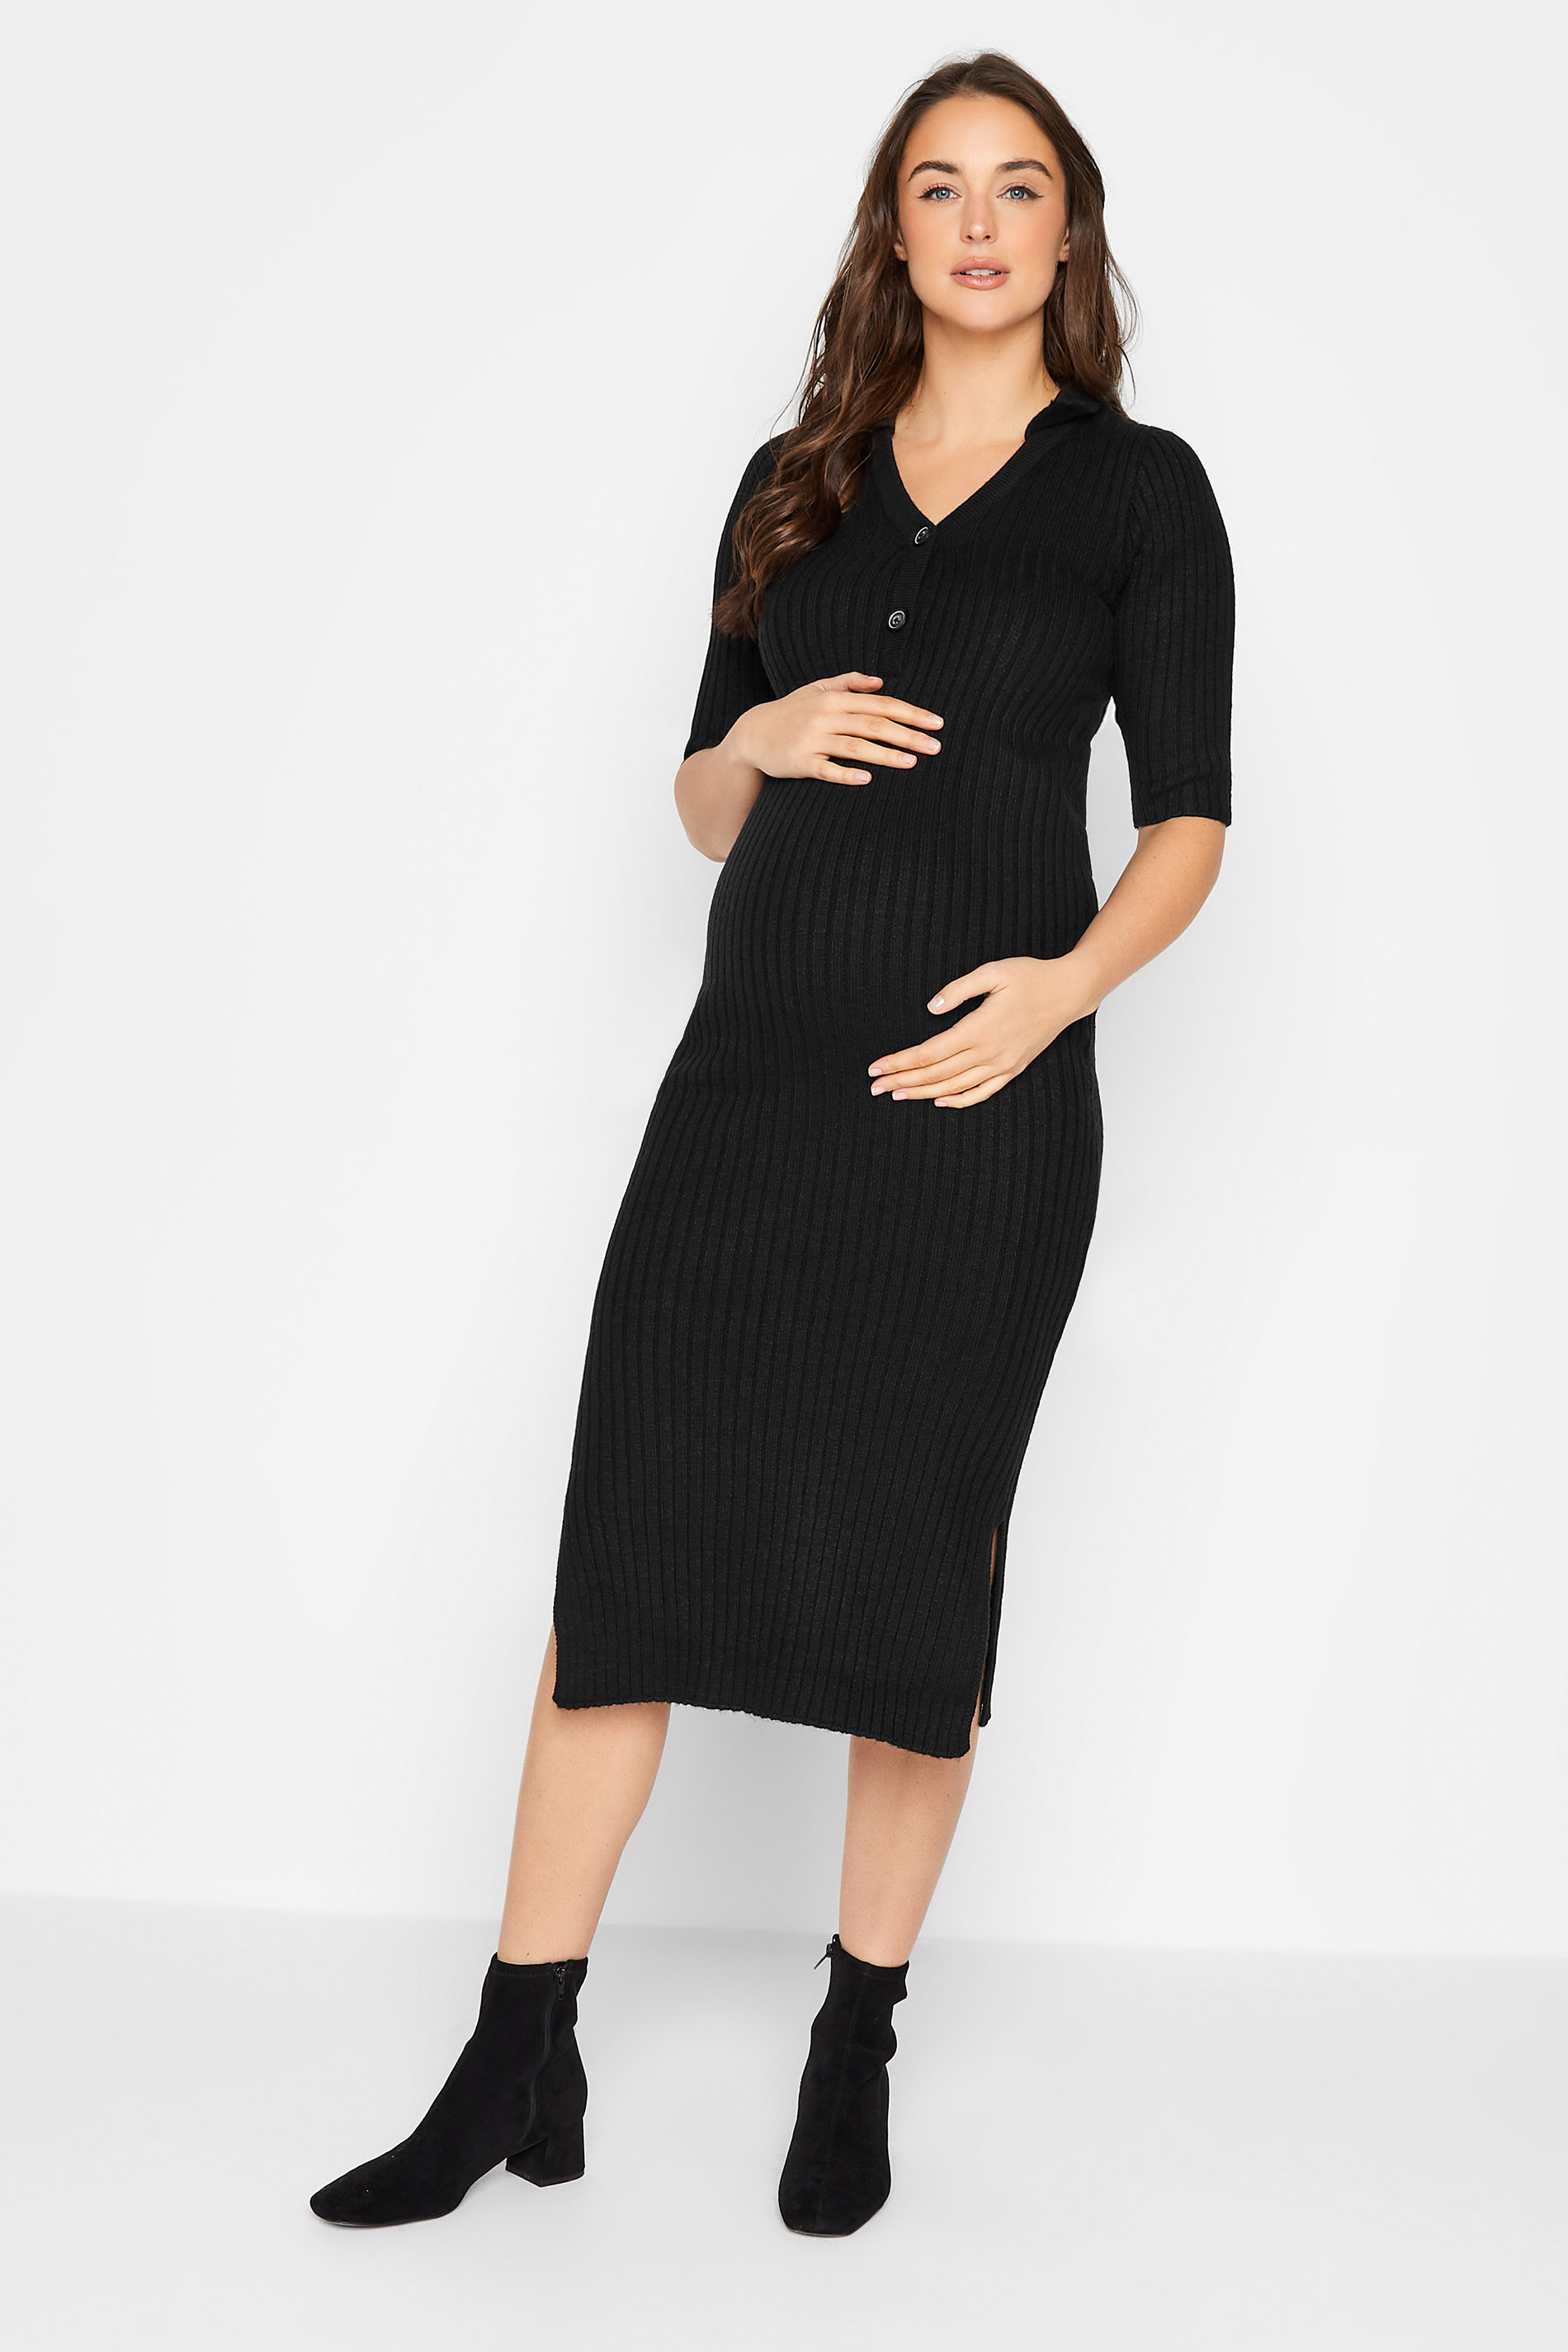 LTS Tall Women's Maternity Black Knitted Midaxi Dress | Long Tall Sally  2